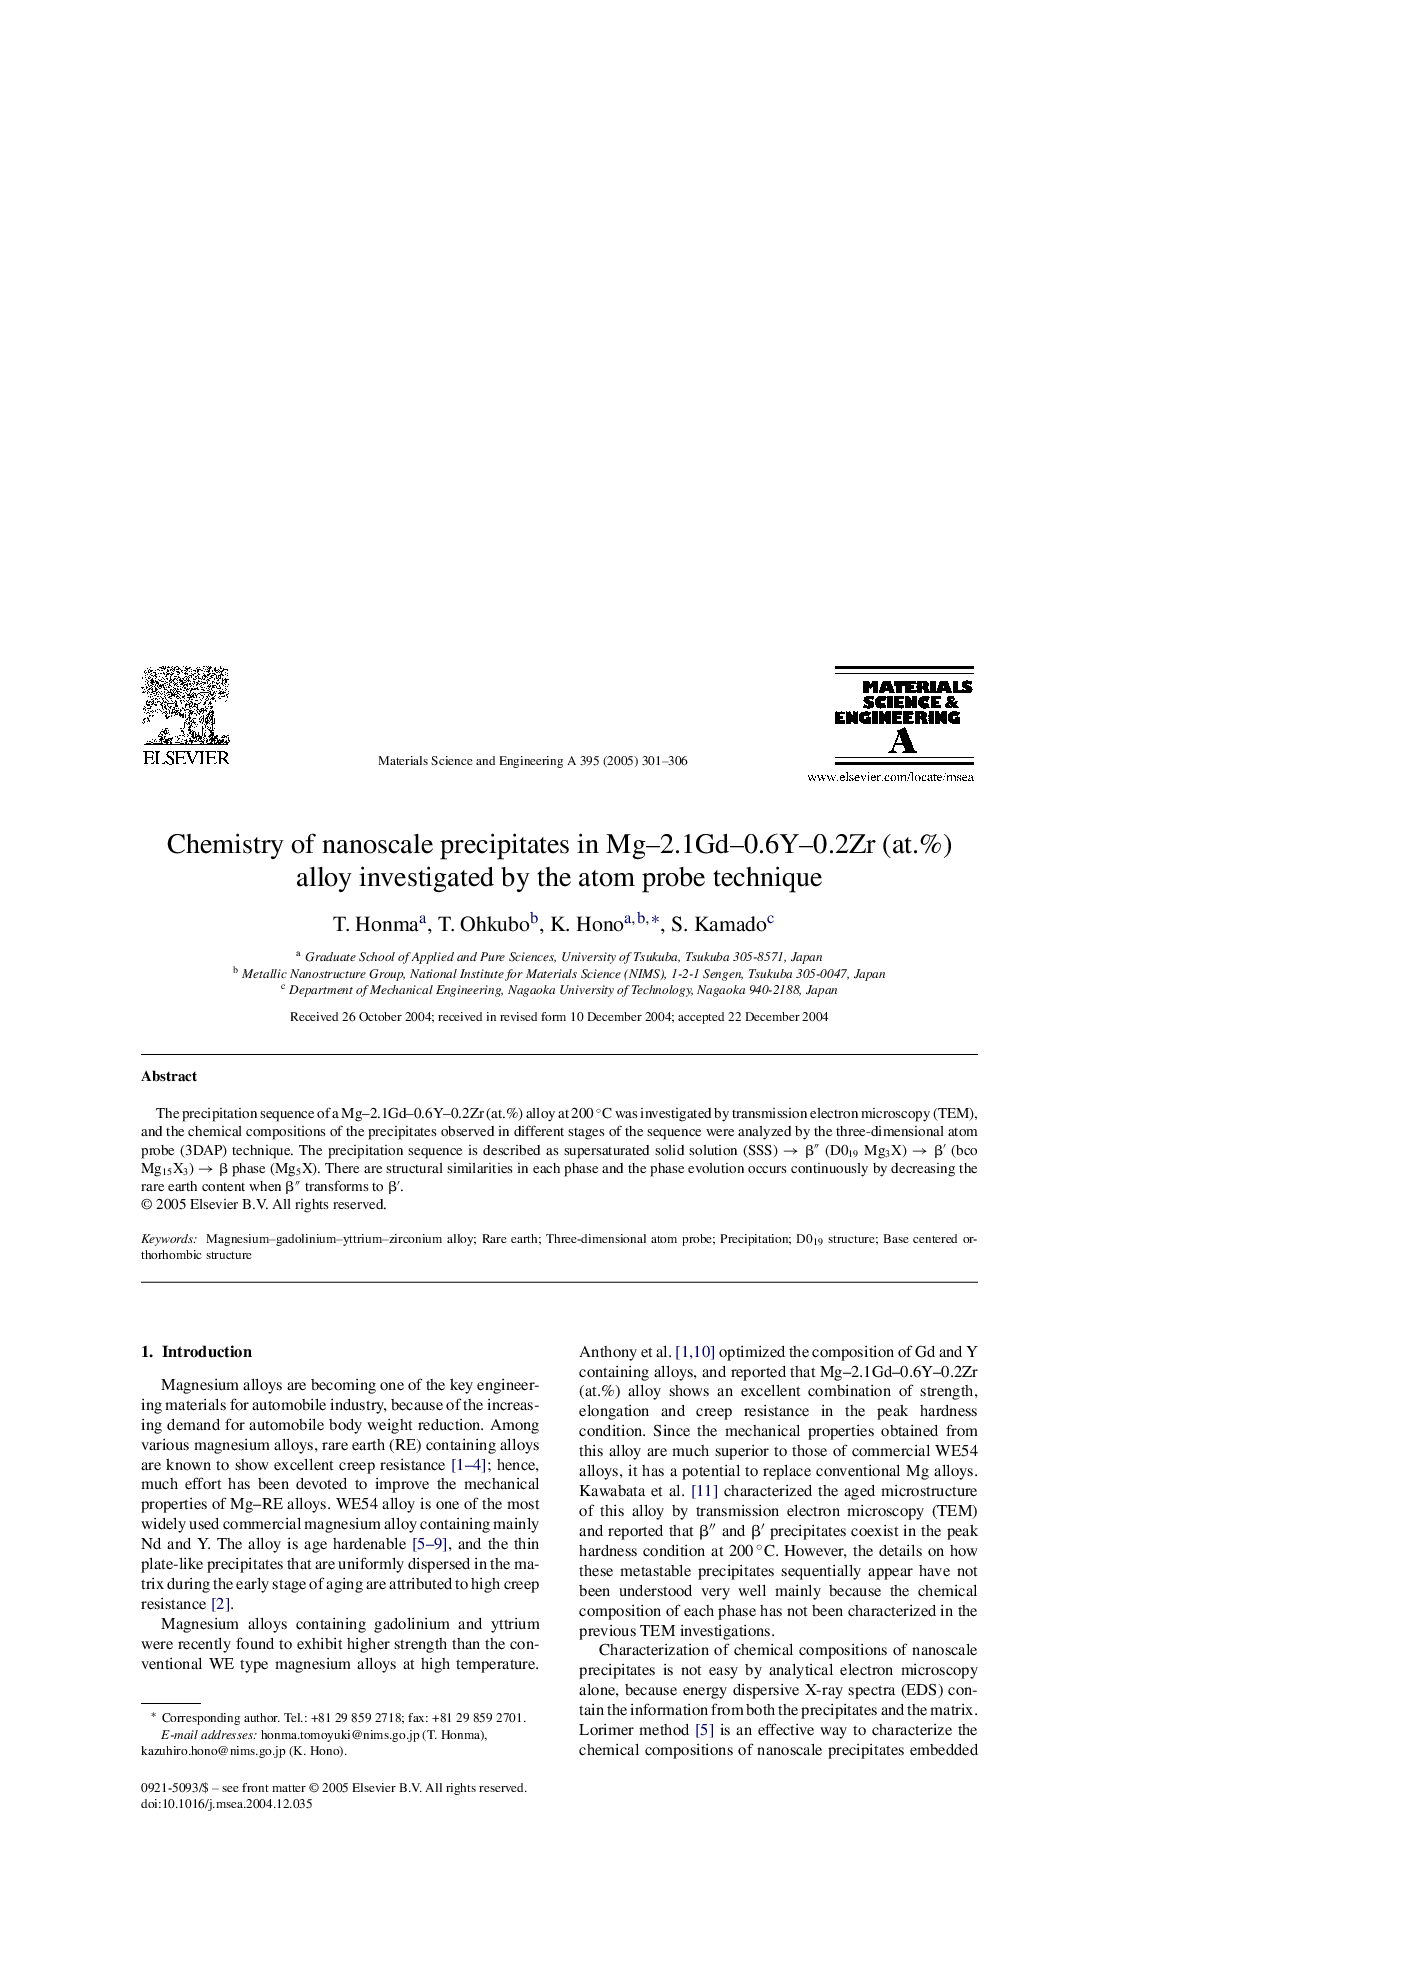 Chemistry of nanoscale precipitates in Mg-2.1Gd-0.6Y-0.2Zr (at.%) alloy investigated by the atom probe technique